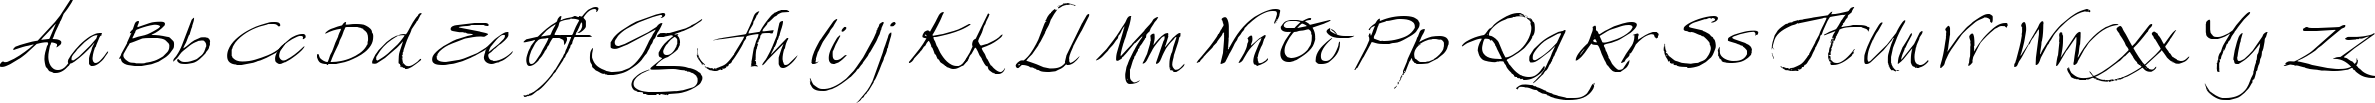 Пример написания английского алфавита шрифтом Swan Song